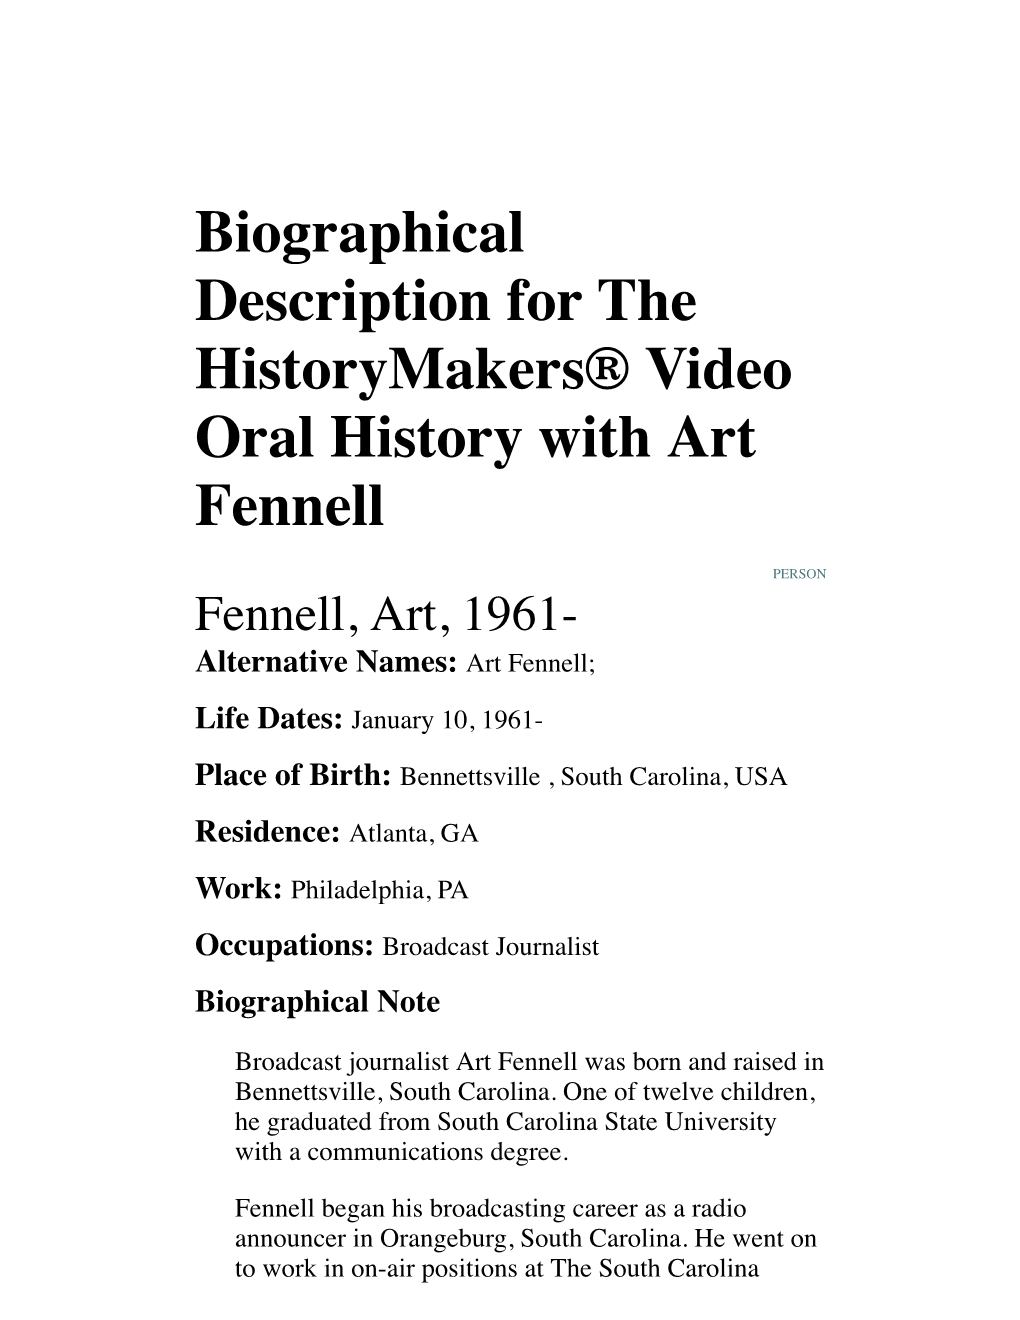 Fennell, Art, 1961- Alternative Names: Art Fennell;